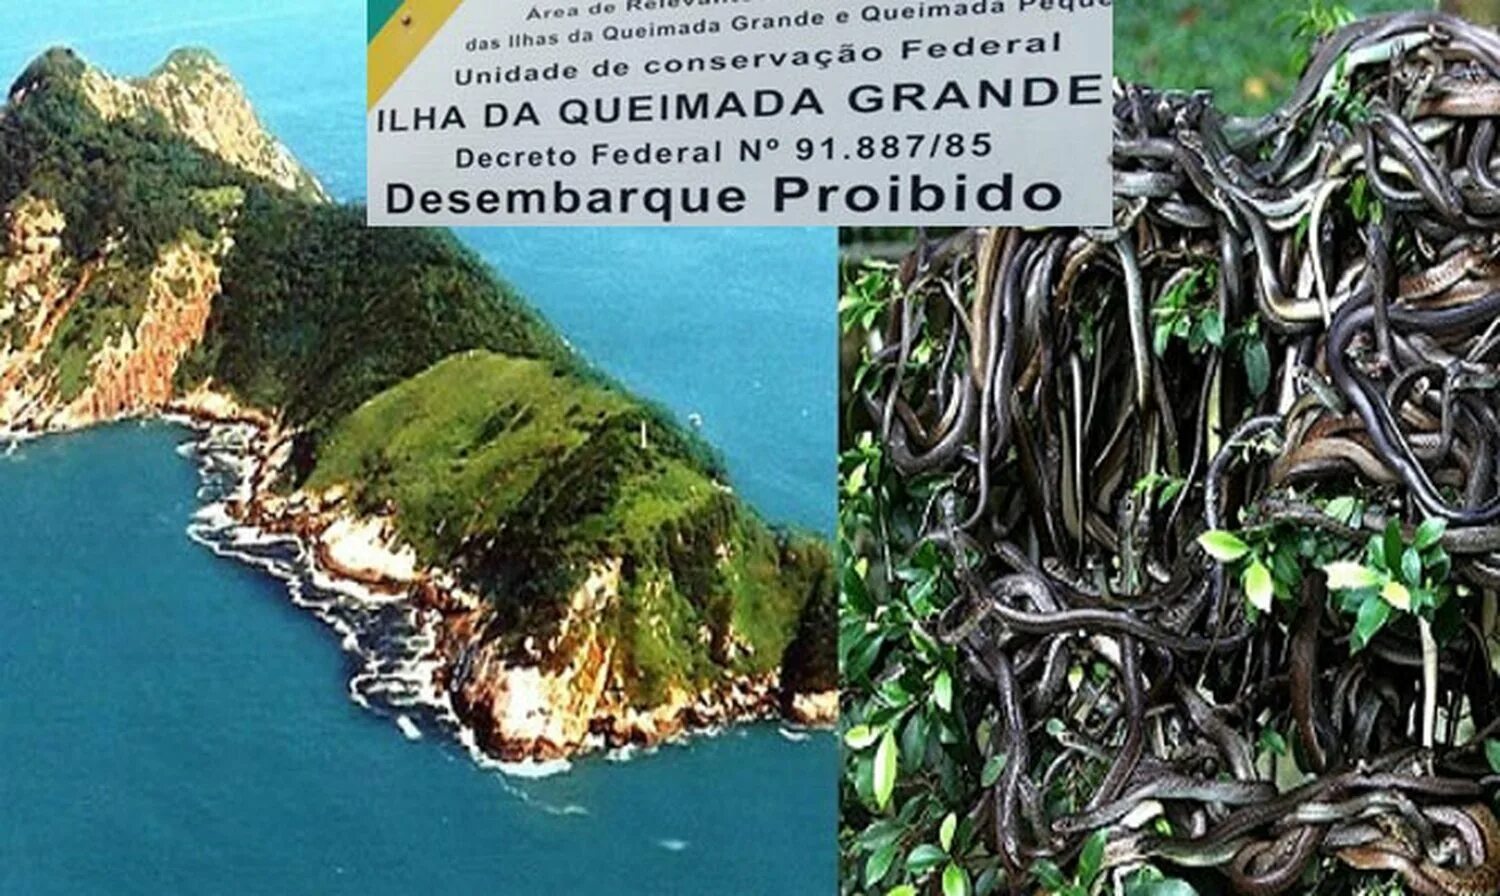 Острова змеиный где. Остров Кеймада-Гранди Бразилия. Остров Кеймада-Гранди змеи. Маяк на острове Кеймада-Гранди Бразилия. Змеиный остров, Сан-Паулу, Бразилия.